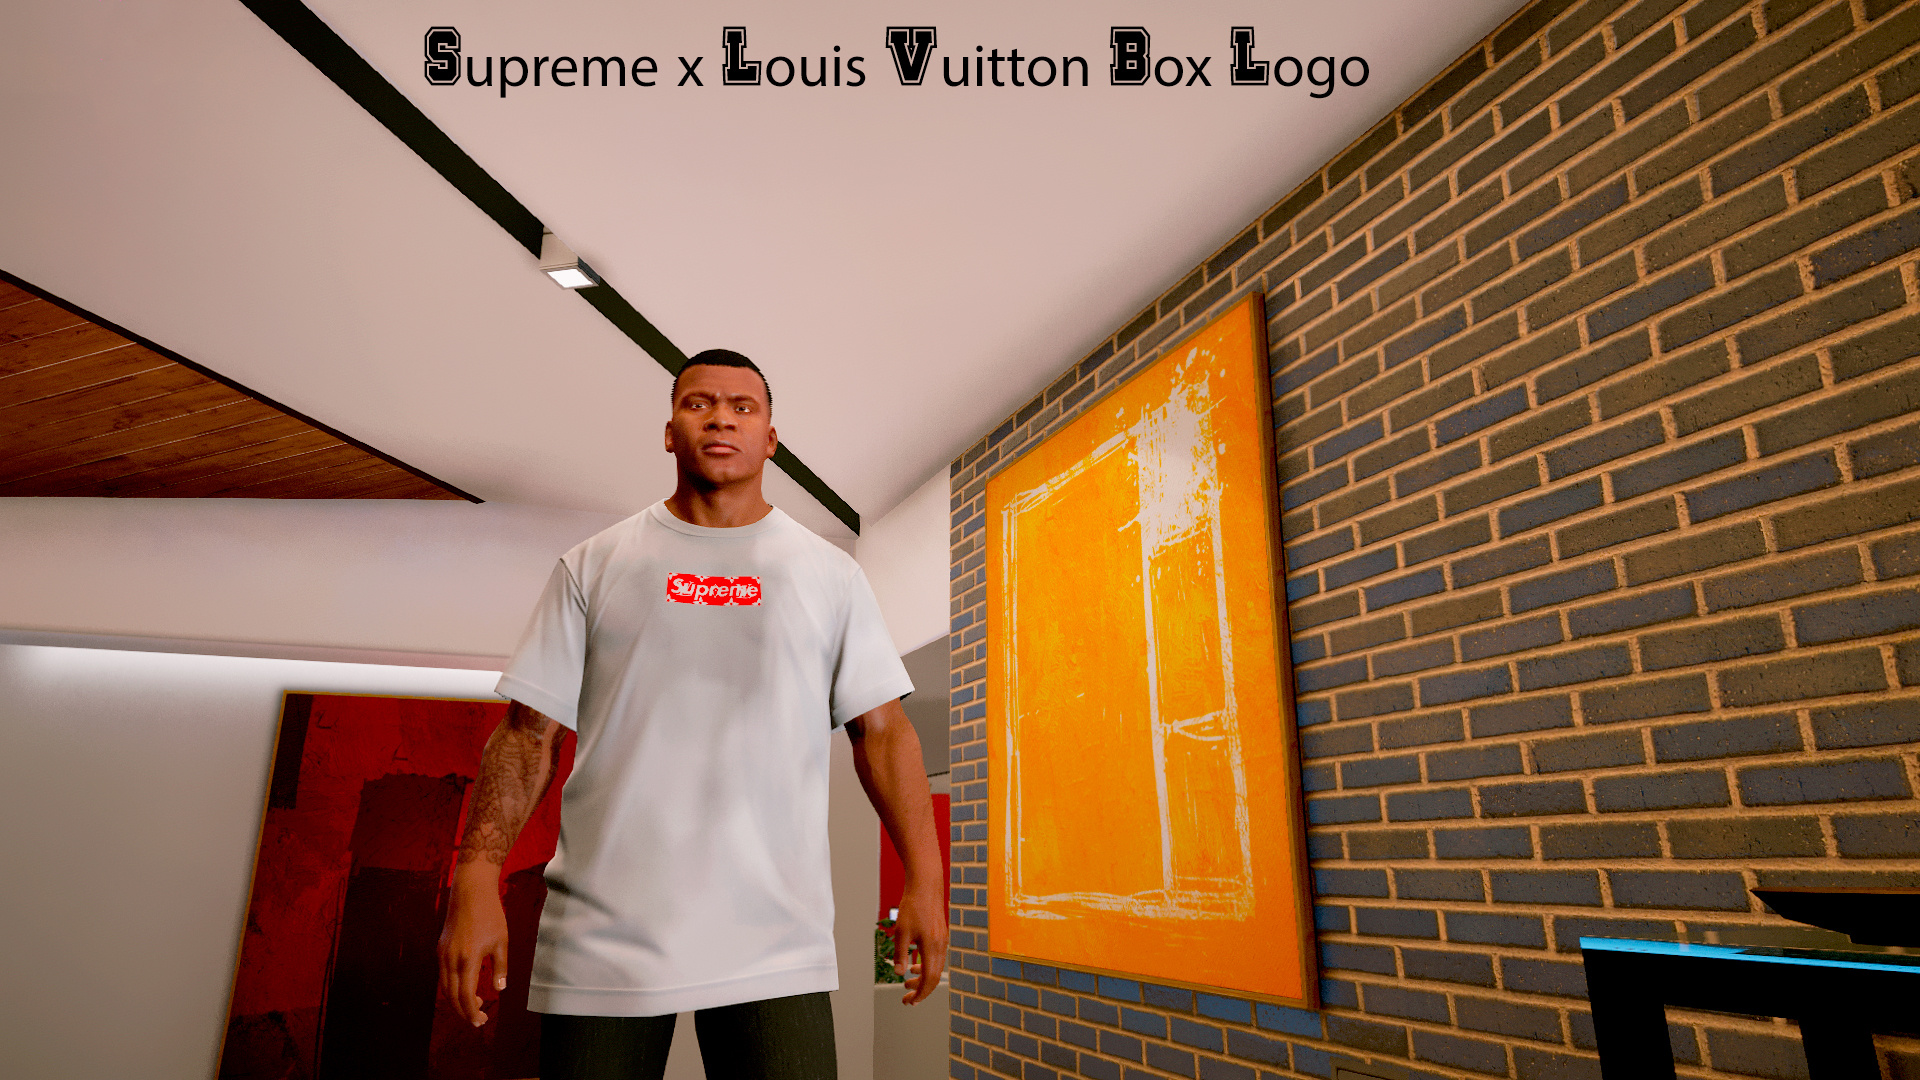 Supreme x Louis Vuitton Box Logo Tee for Franklin - www.semadata.org